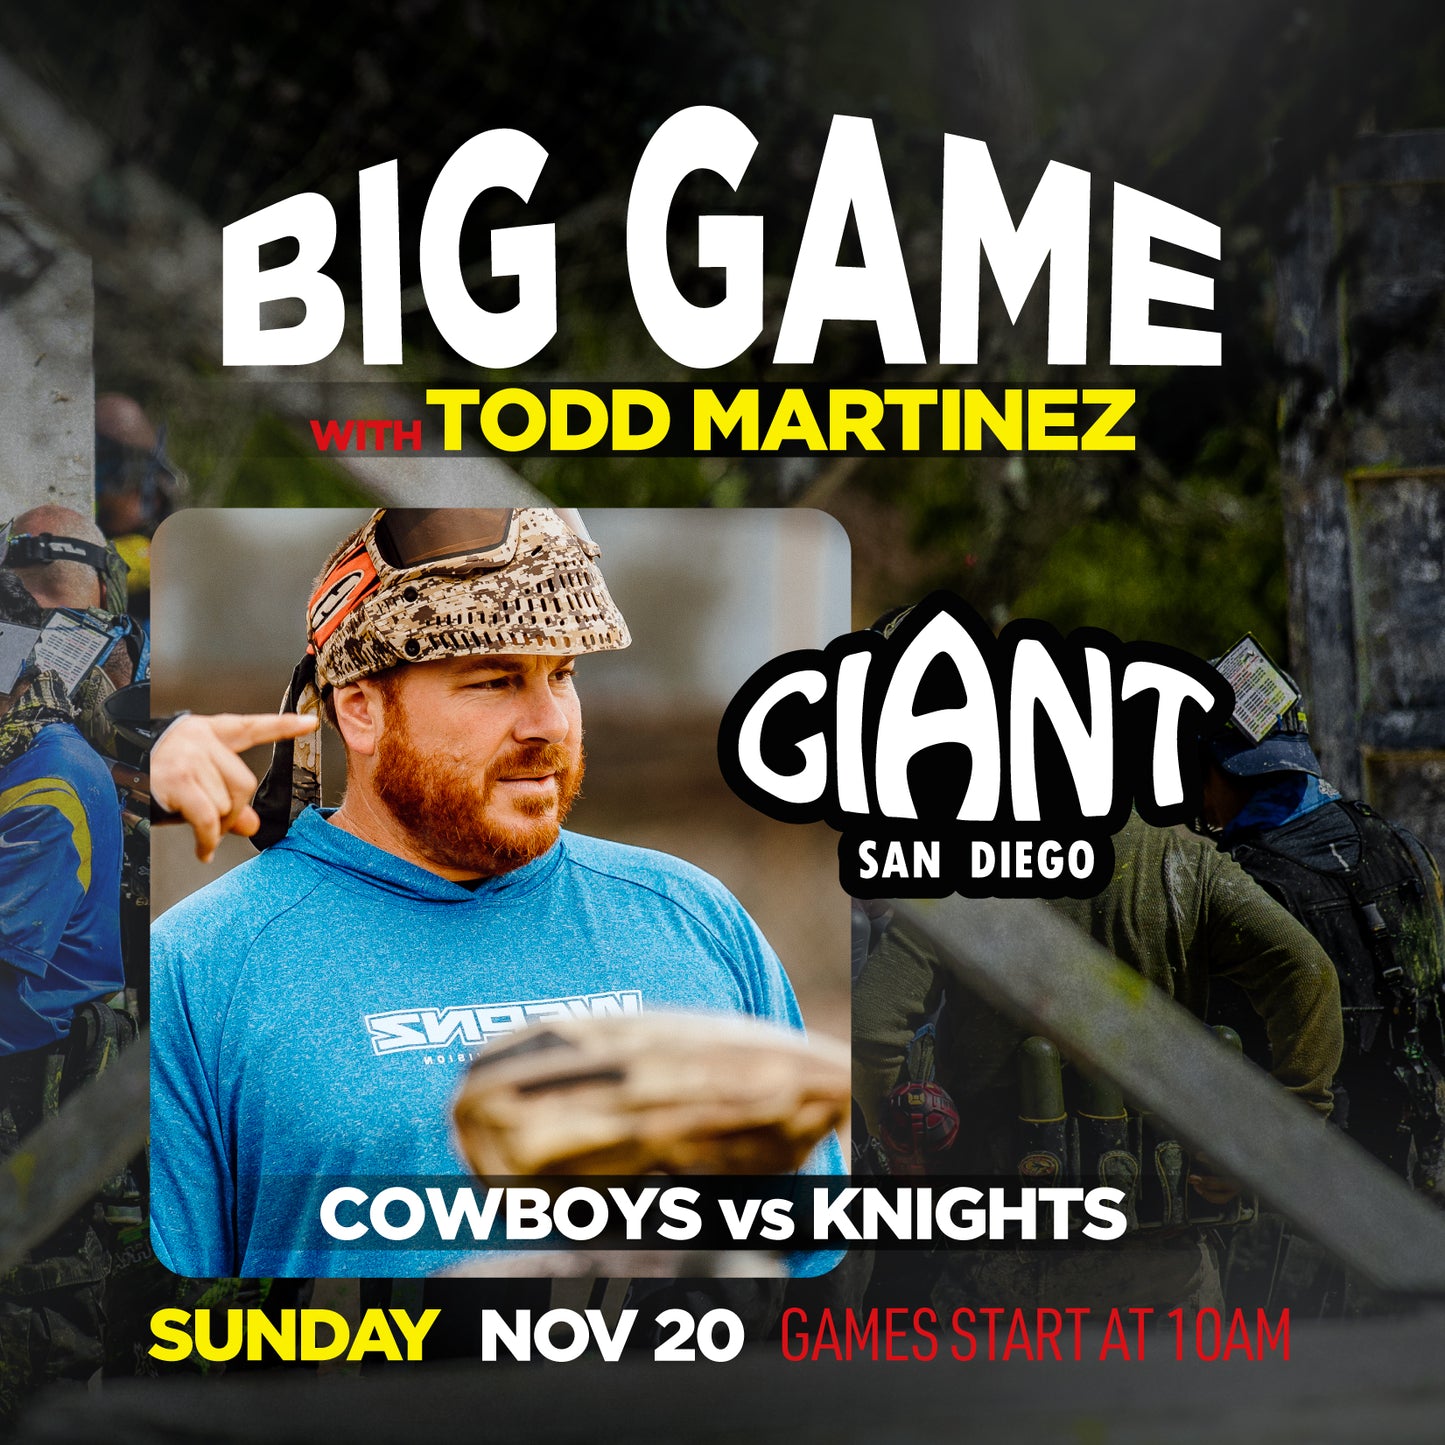 Paintball Big Game with Todd Martinez - November 20 @ Giant San Diego